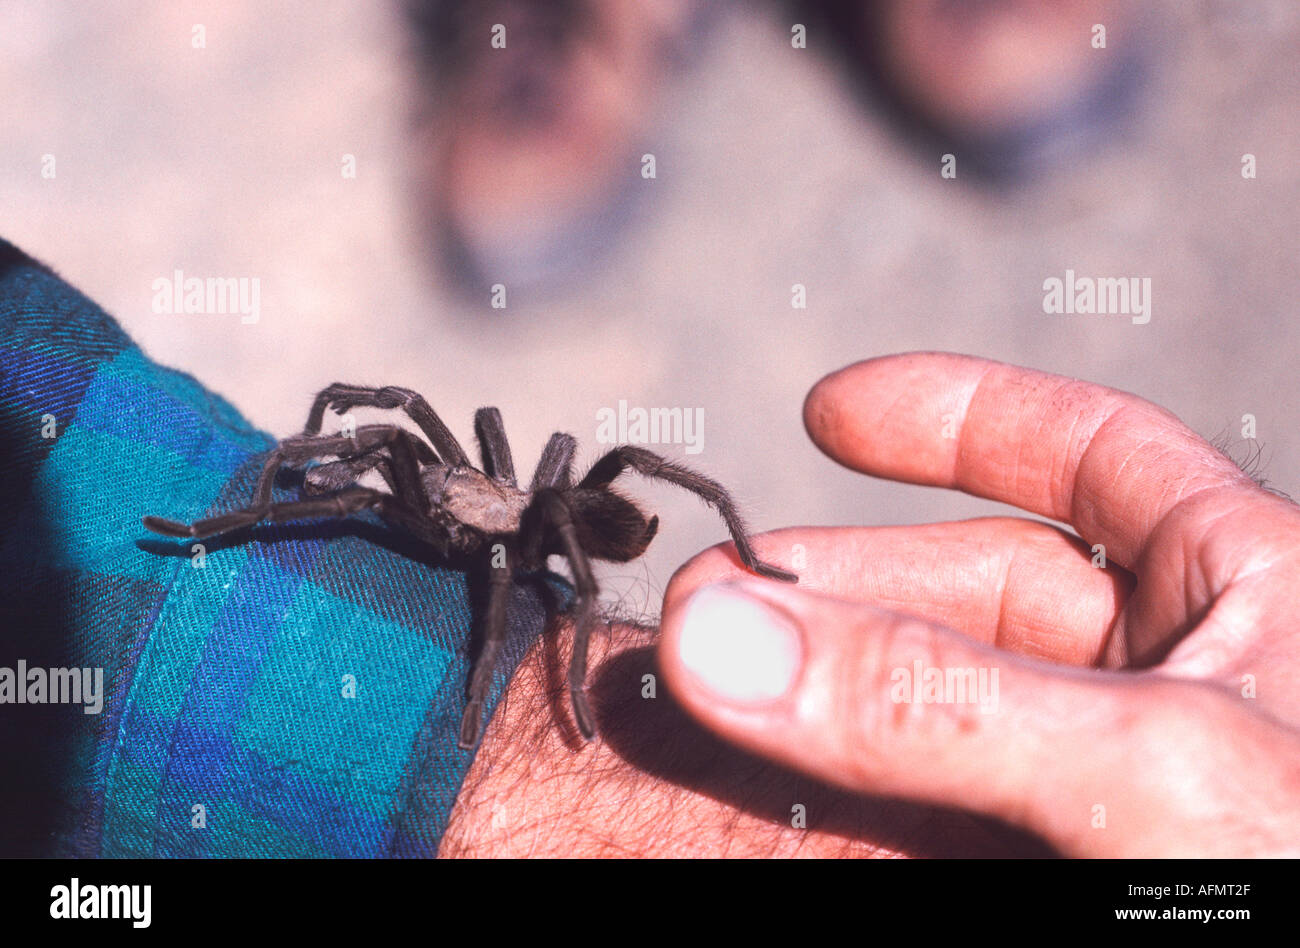 Tarantula spider on human arm Monte Bello Open Space Preserve Santa Cruz Mountains California USA arachnids venom hand Stock Photo